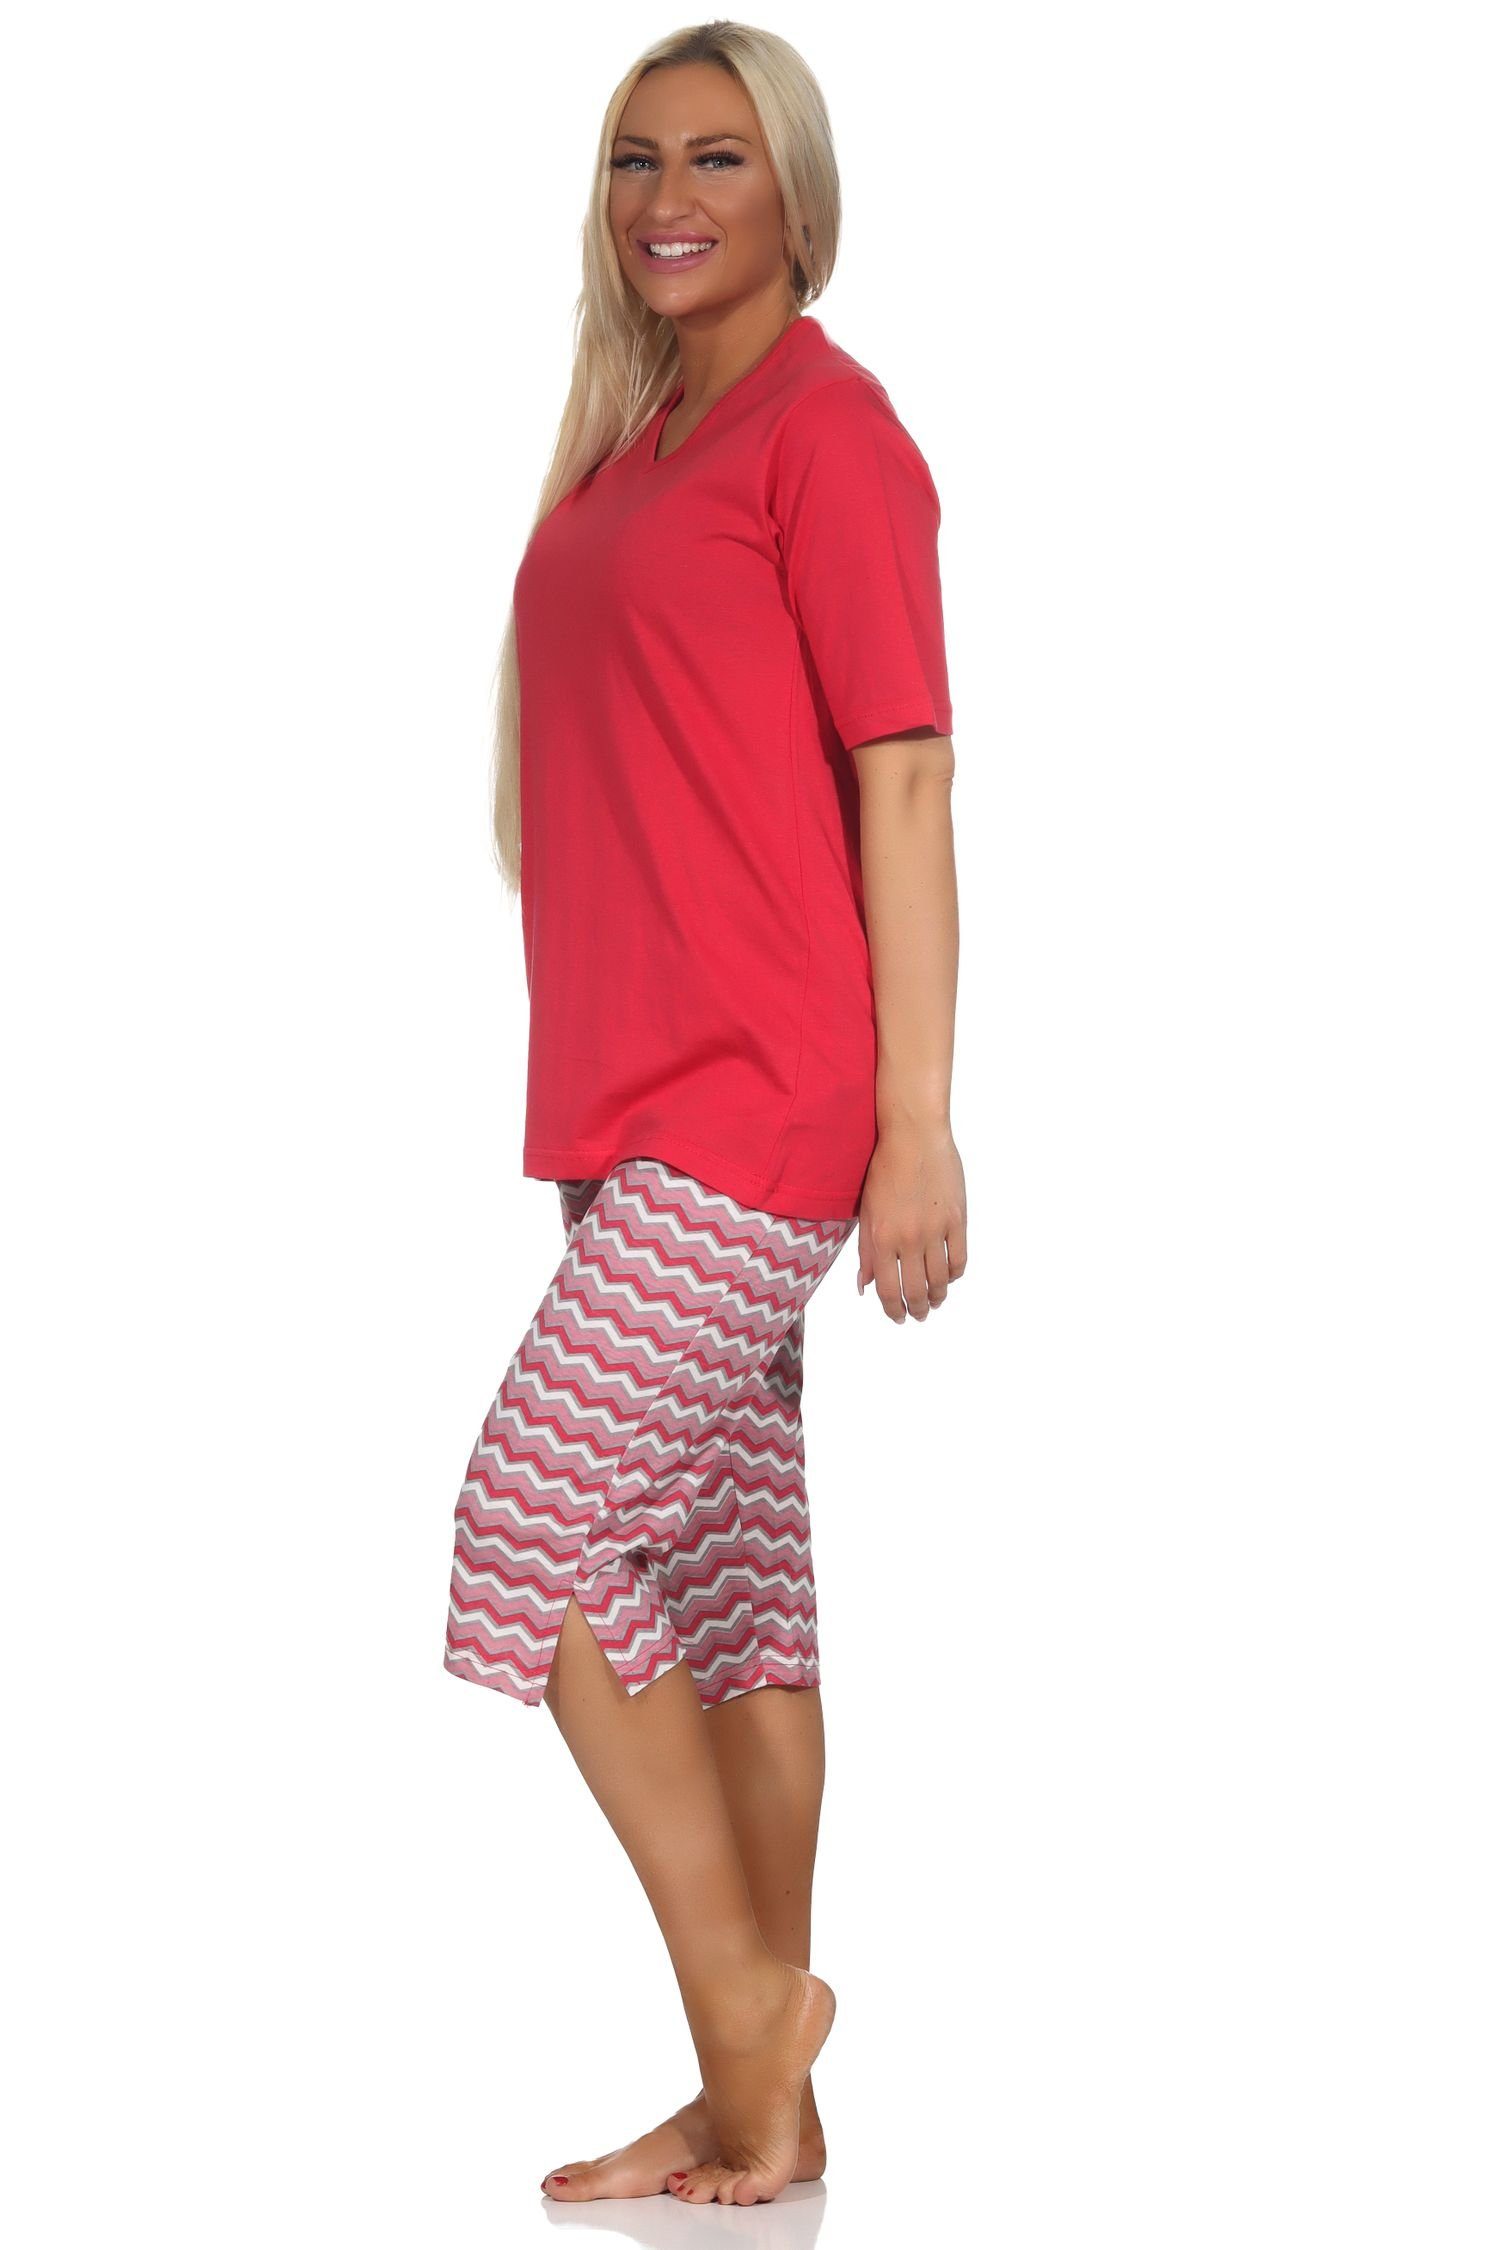 Capri Damen Pyjama Shorts, im rot Pyjama Ethno-Style 3/4 Capri Schlafanzug Normann mit